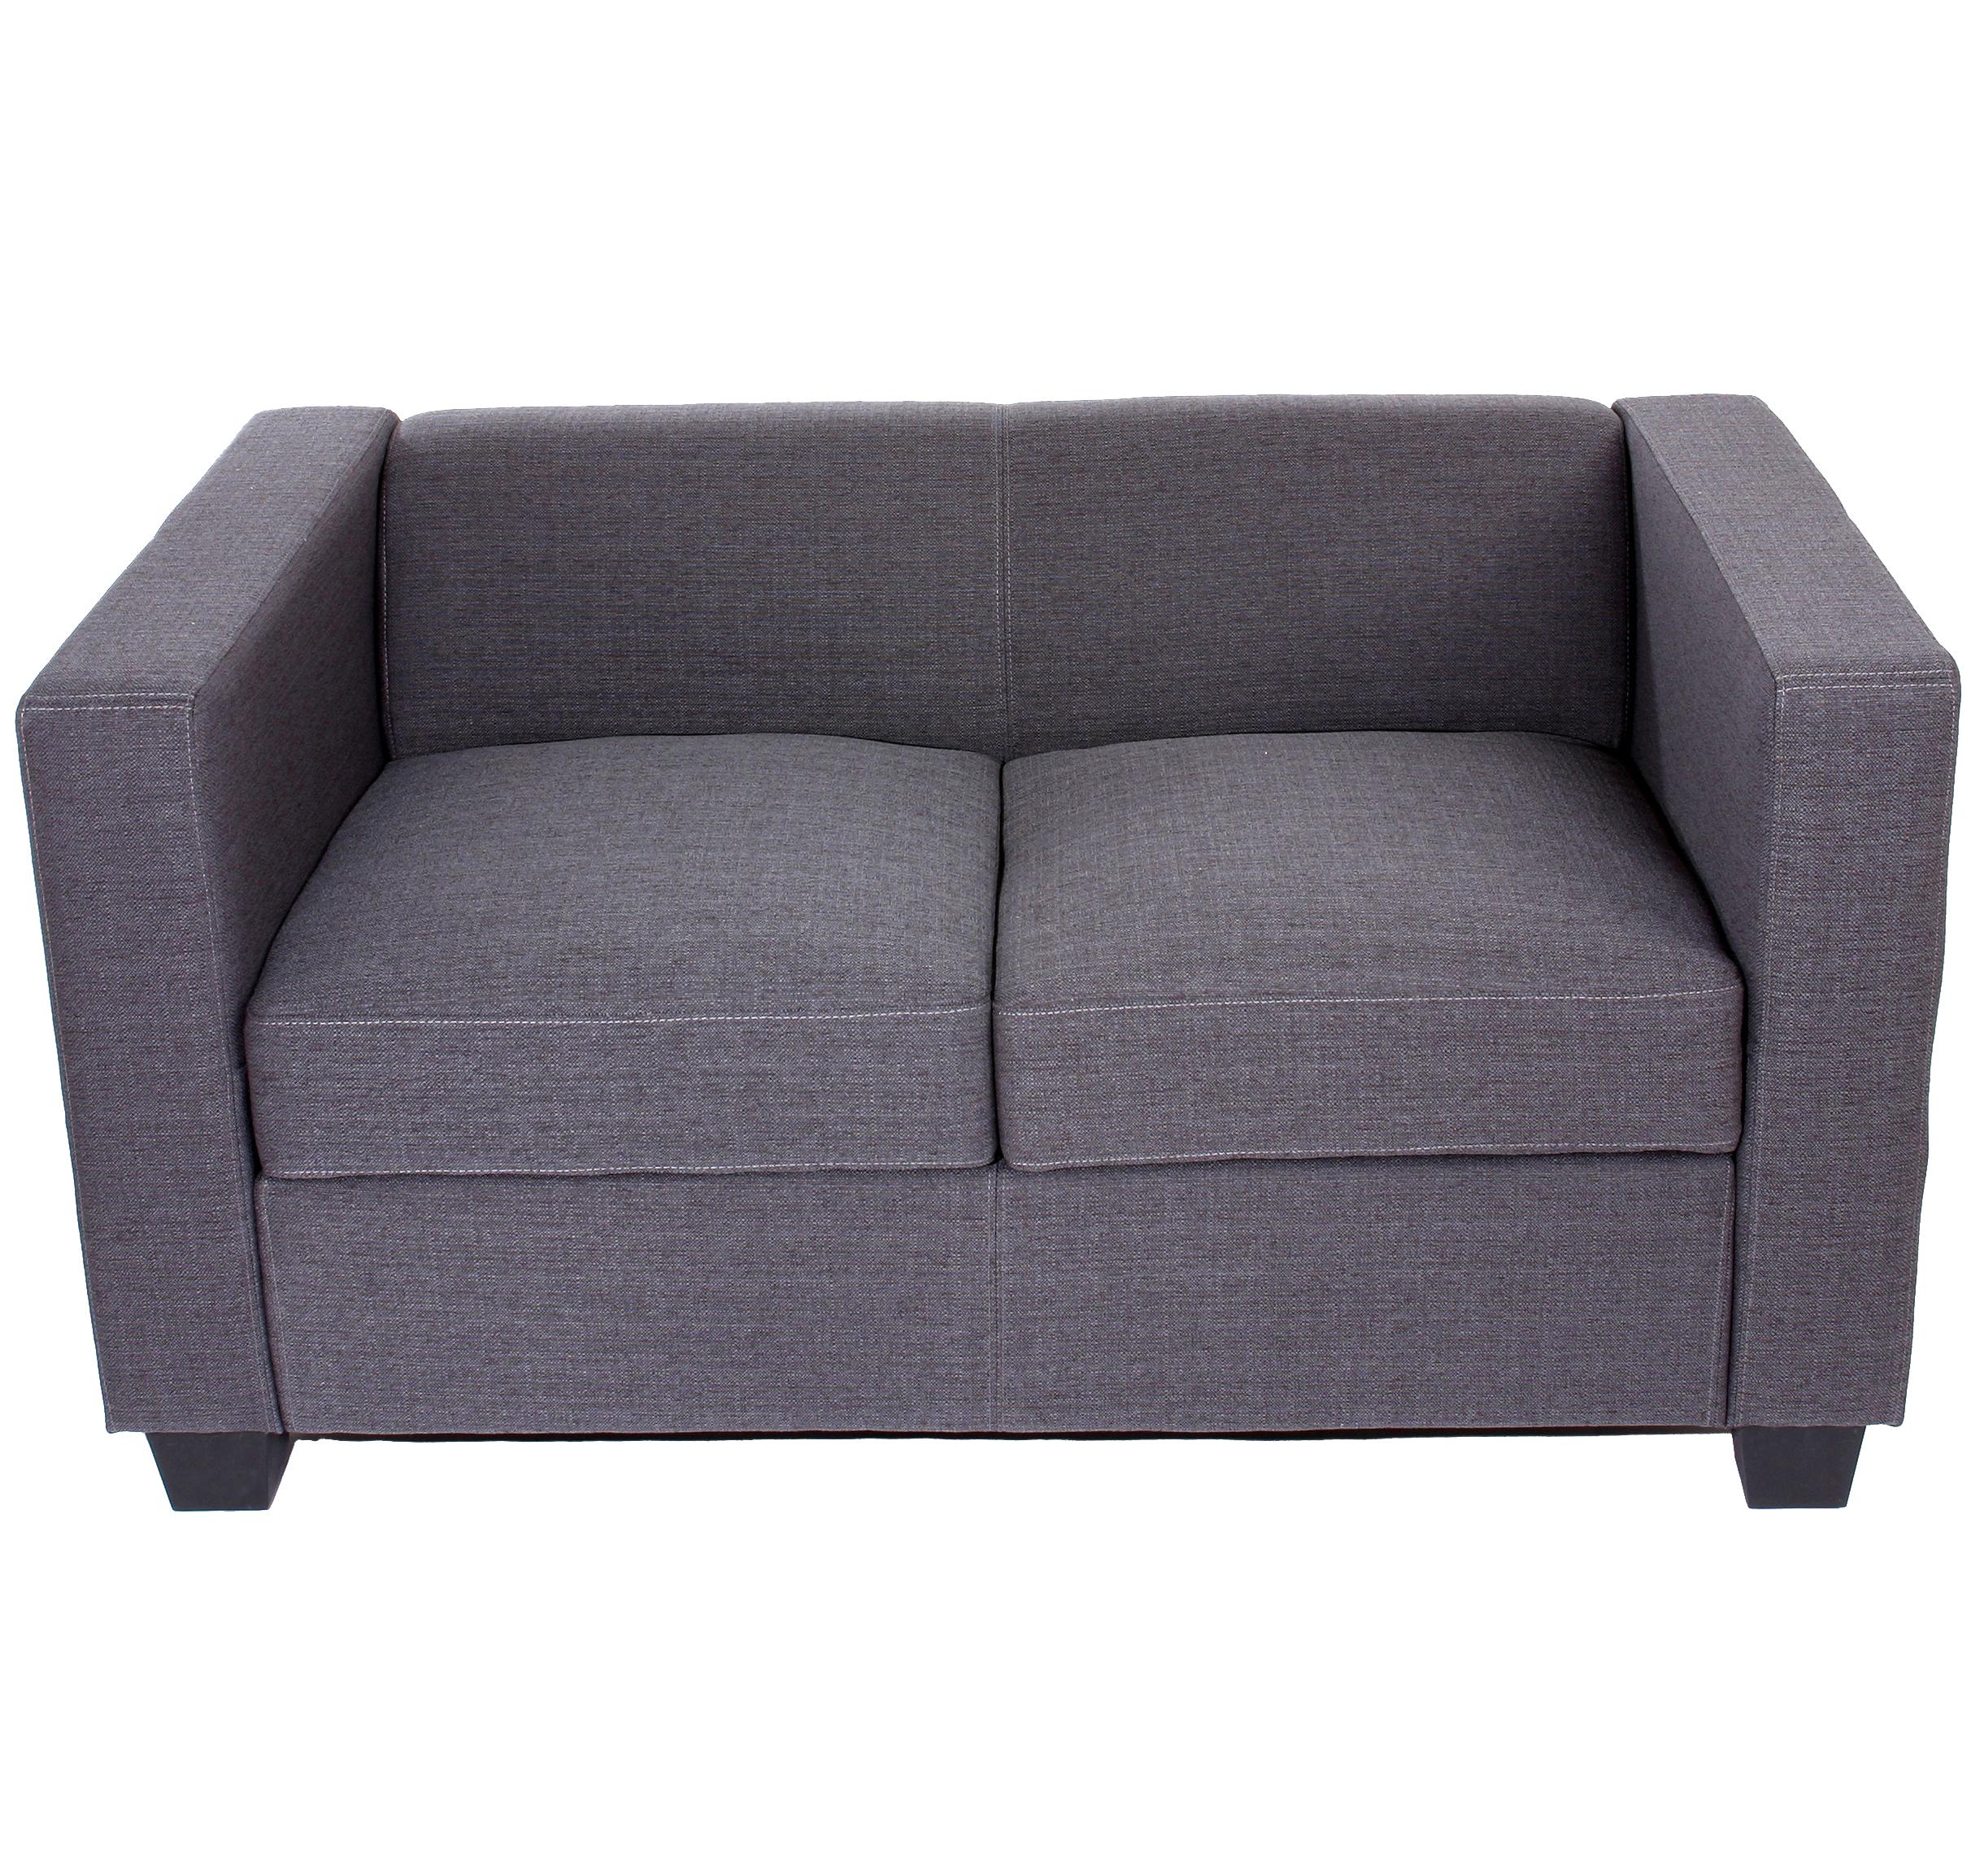 Sessel BASEL, 2 Sitzer, Elegantes Design, großer Komfort, Leder, Farbe Grau